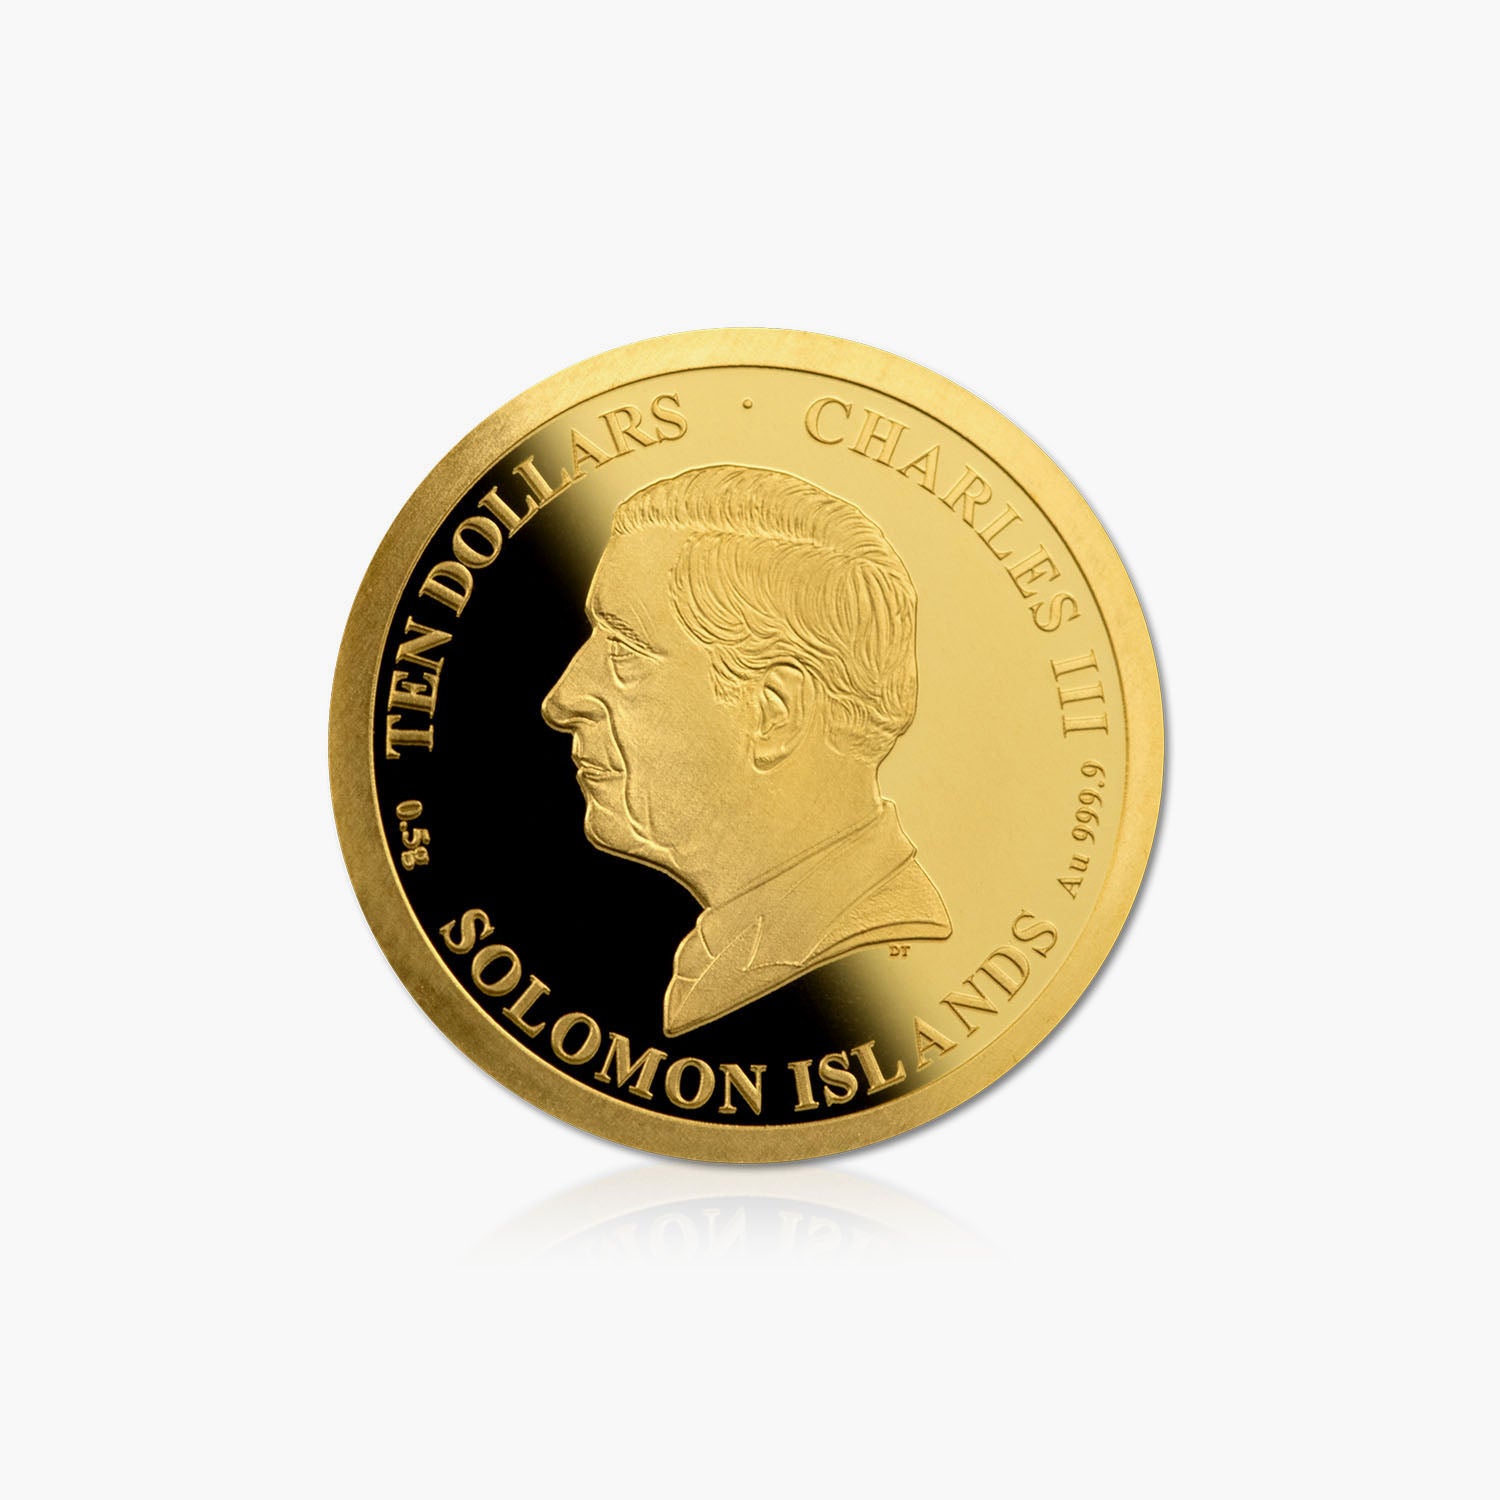 UEFA EURO 2024 Official Mini Gold Emblem Coin